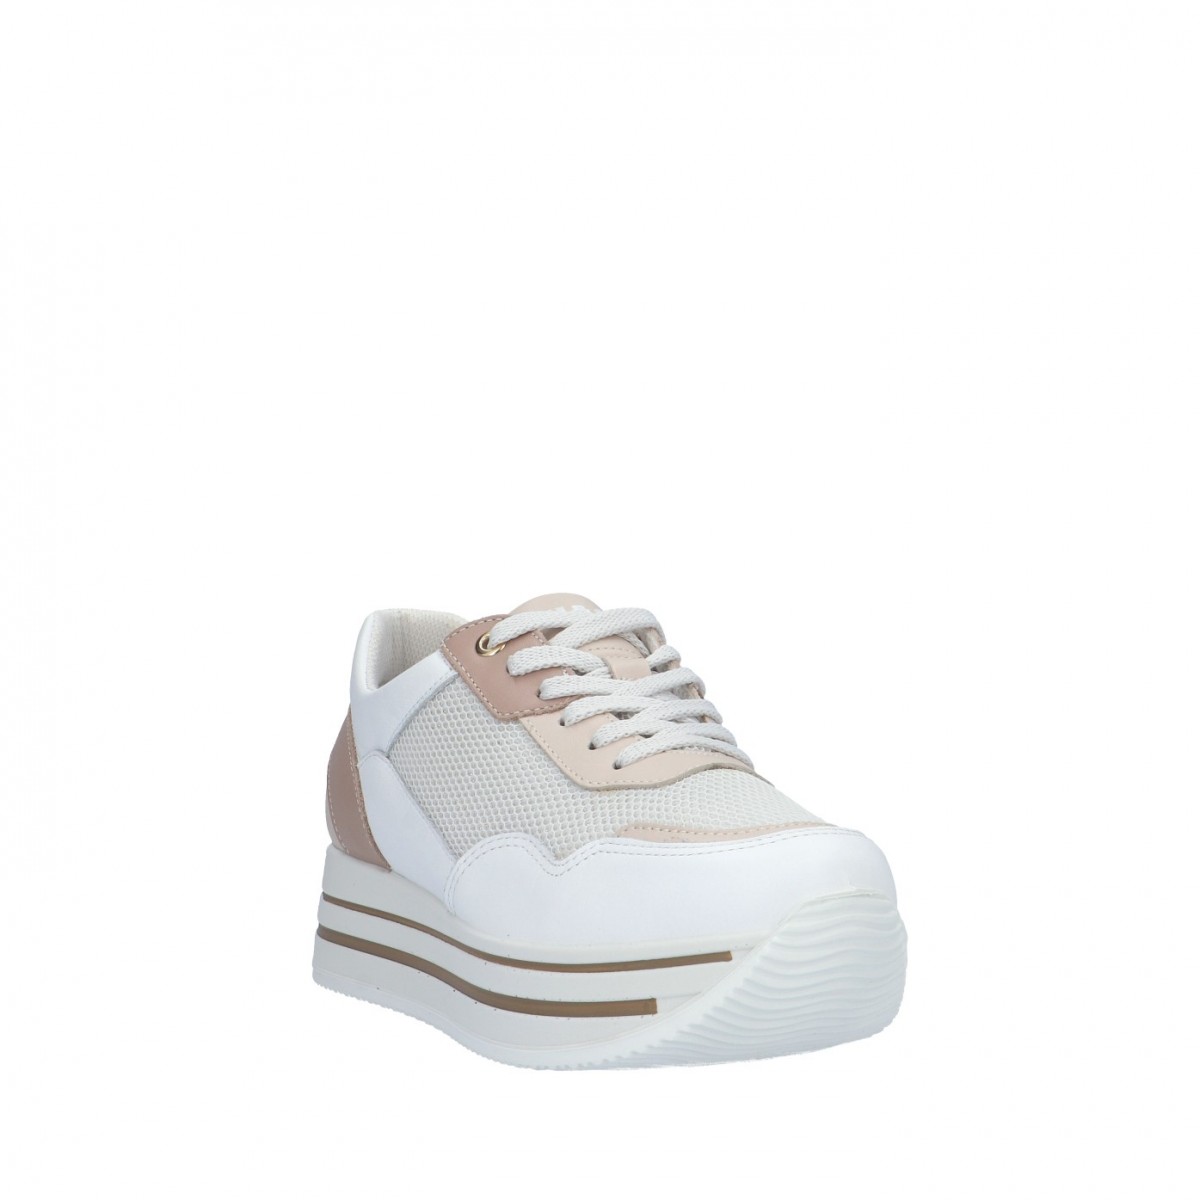 Igi&co Sneaker Bianco/naturale Gomma 3661000